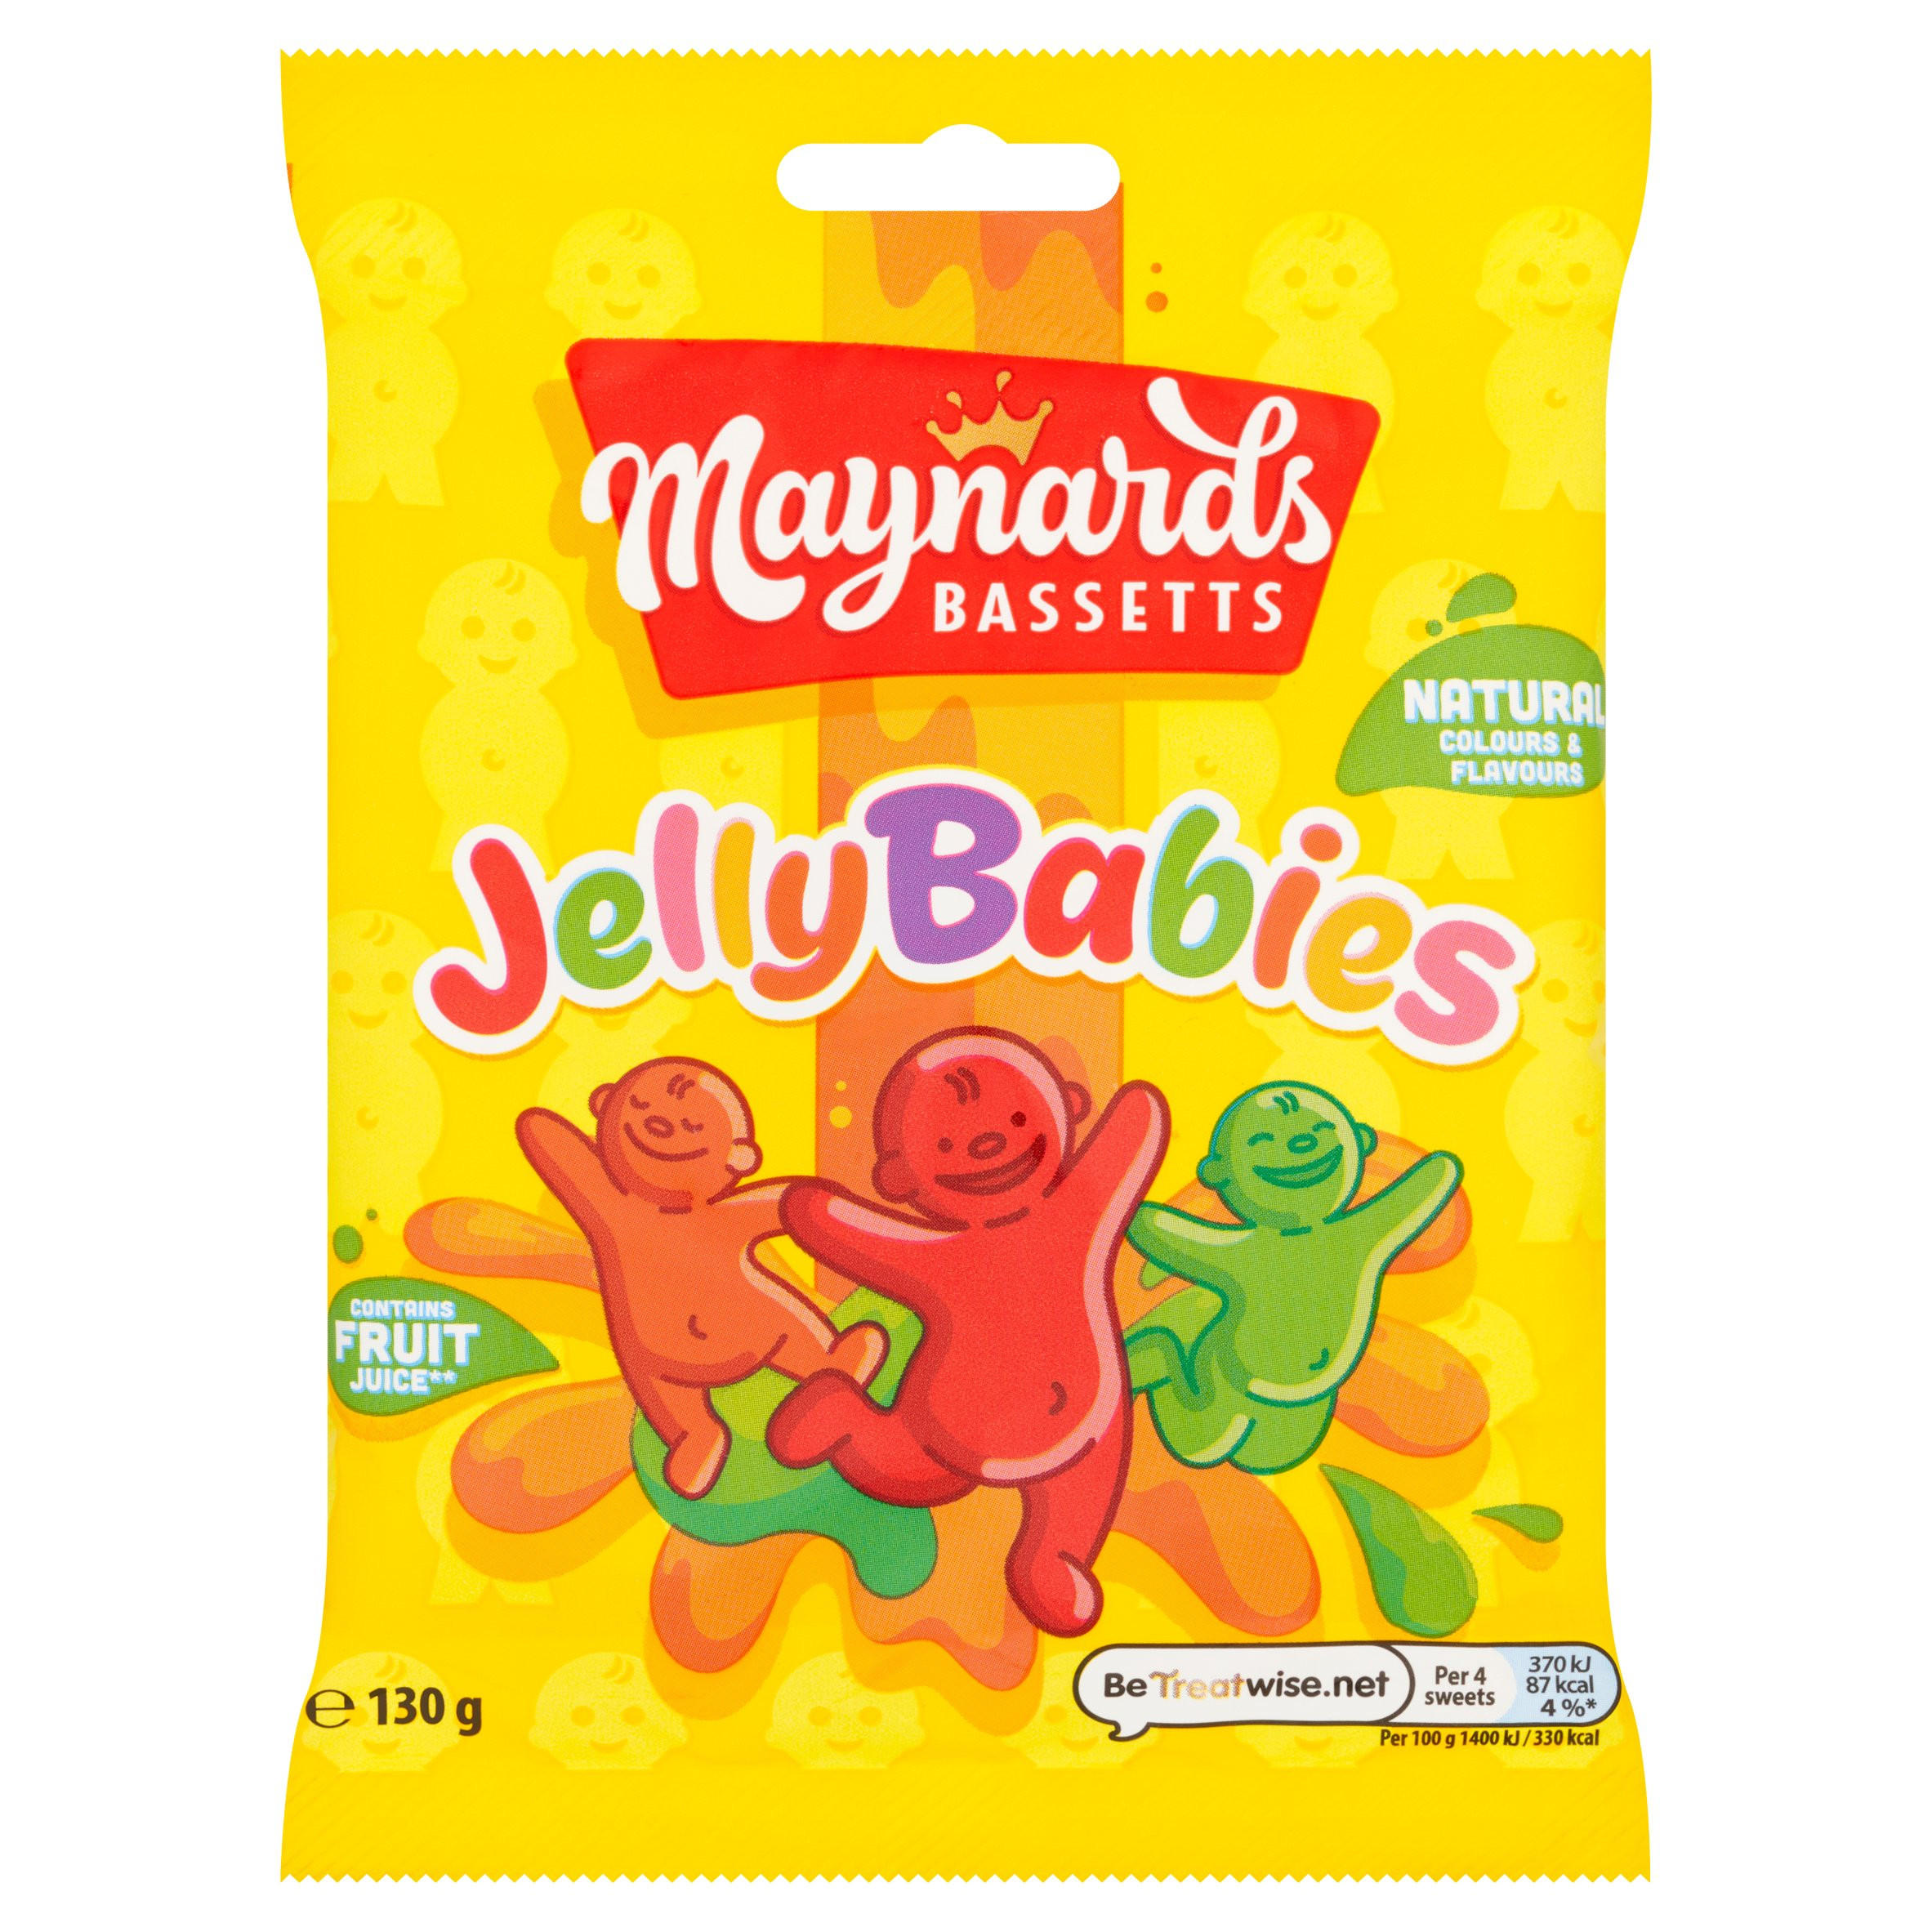 Maynards Bassetts Jelly Babies 130g | Sweets | Iceland Foods